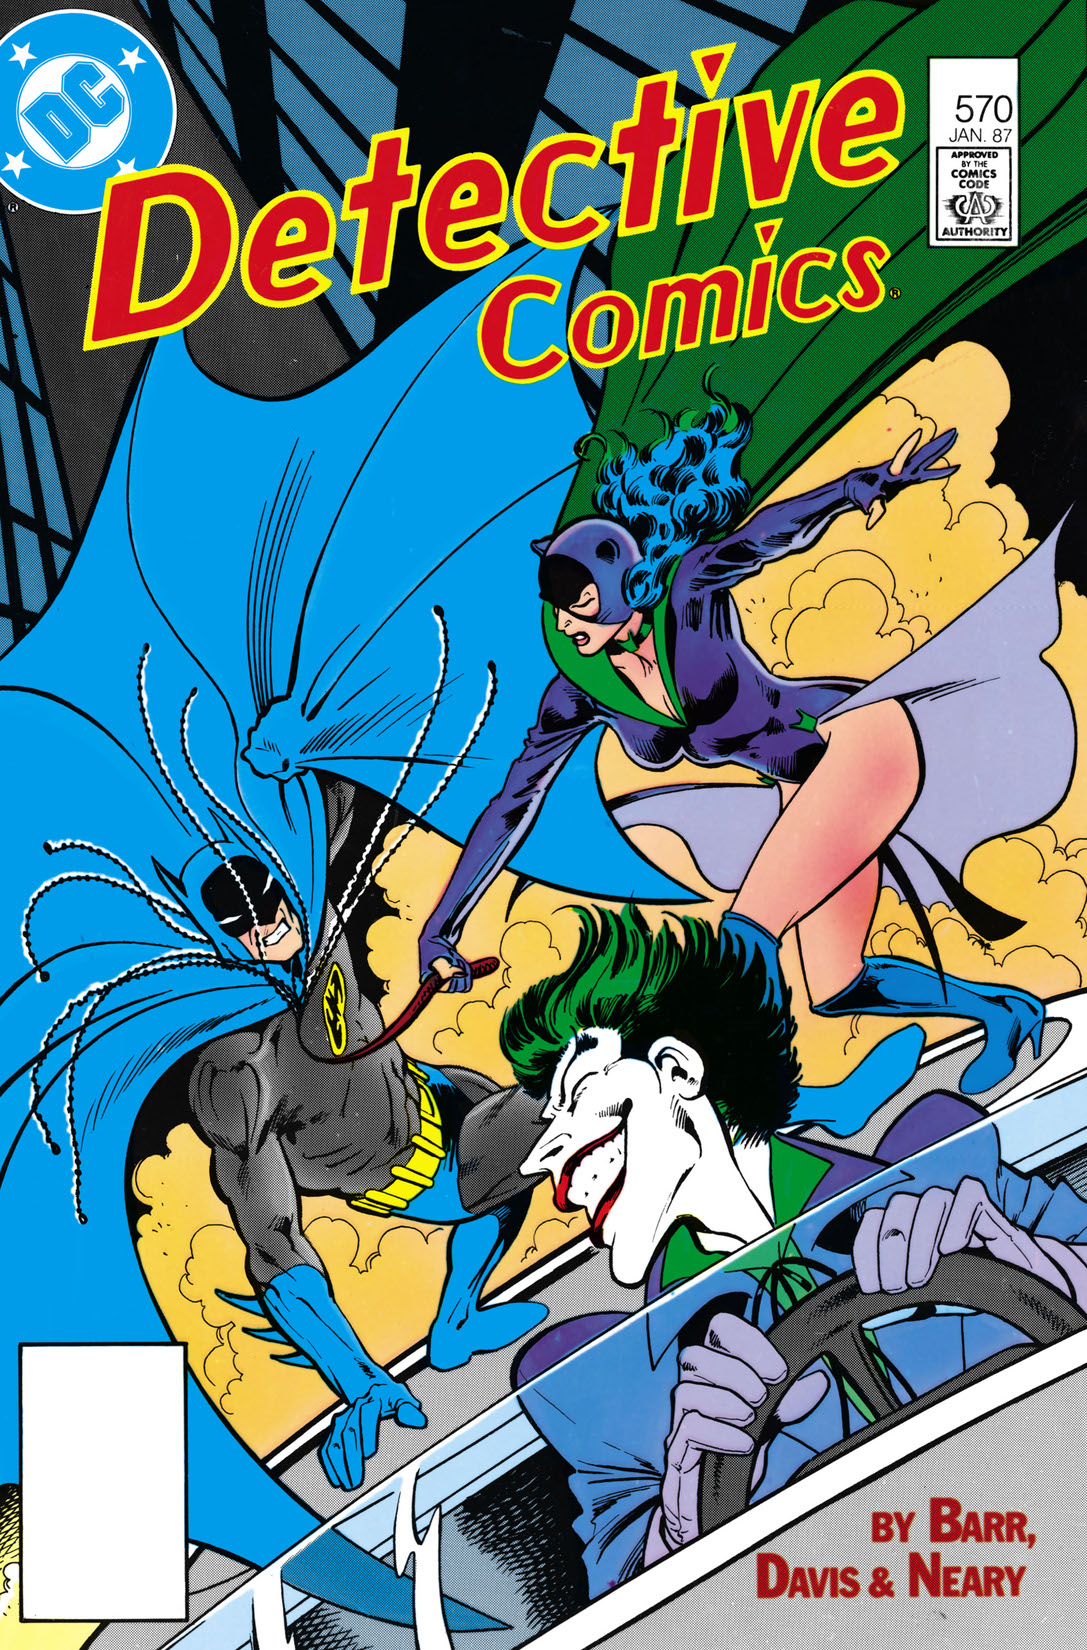 Detective Comics (1937-) #570 preview images